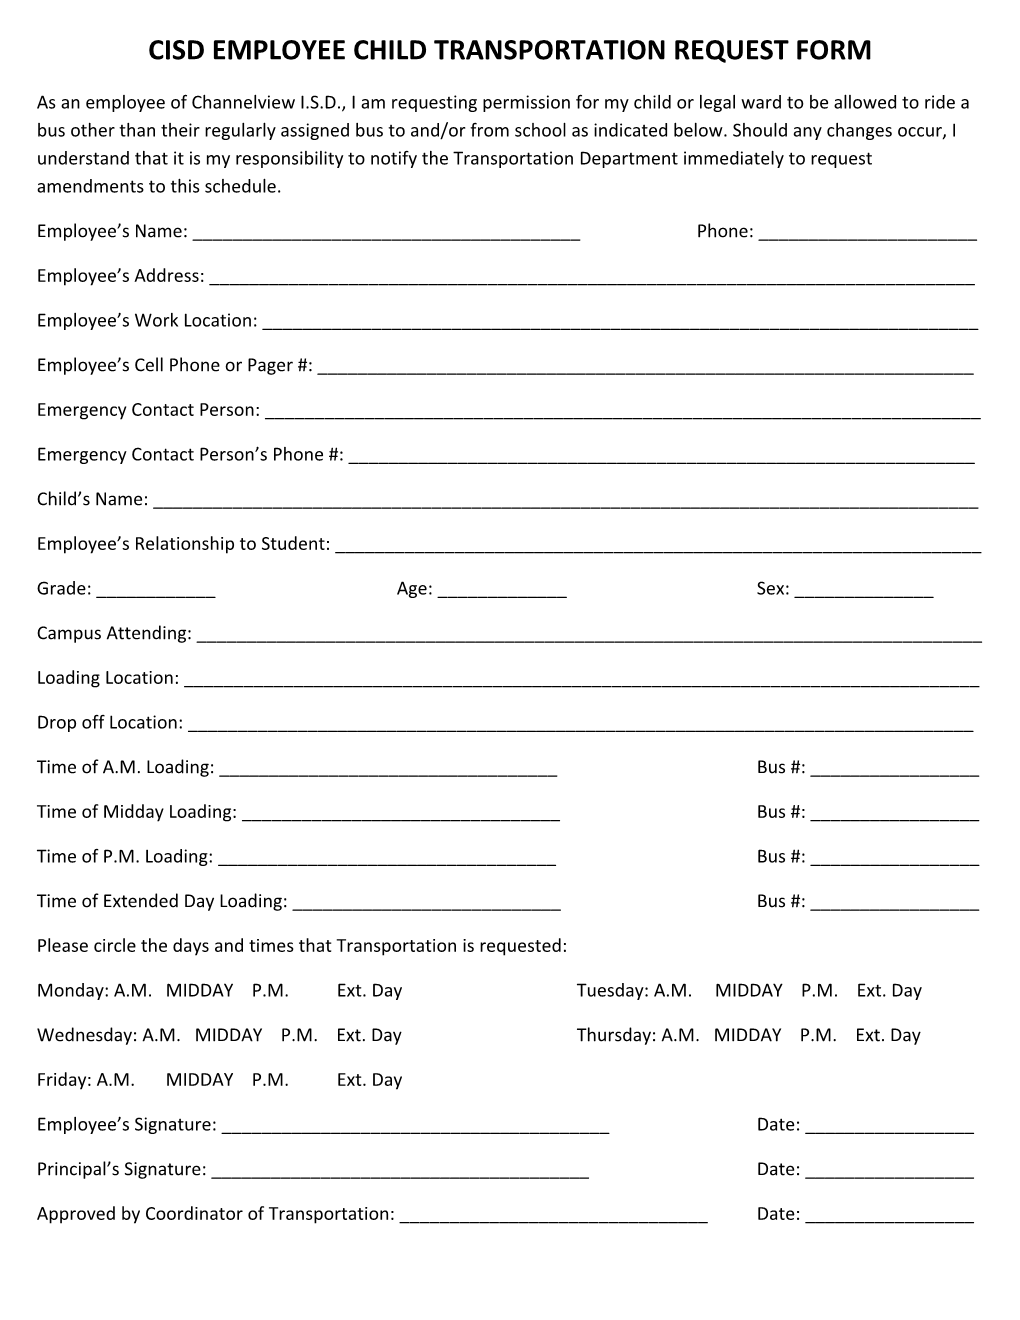 Cisd Employee Child Transportation Request Form